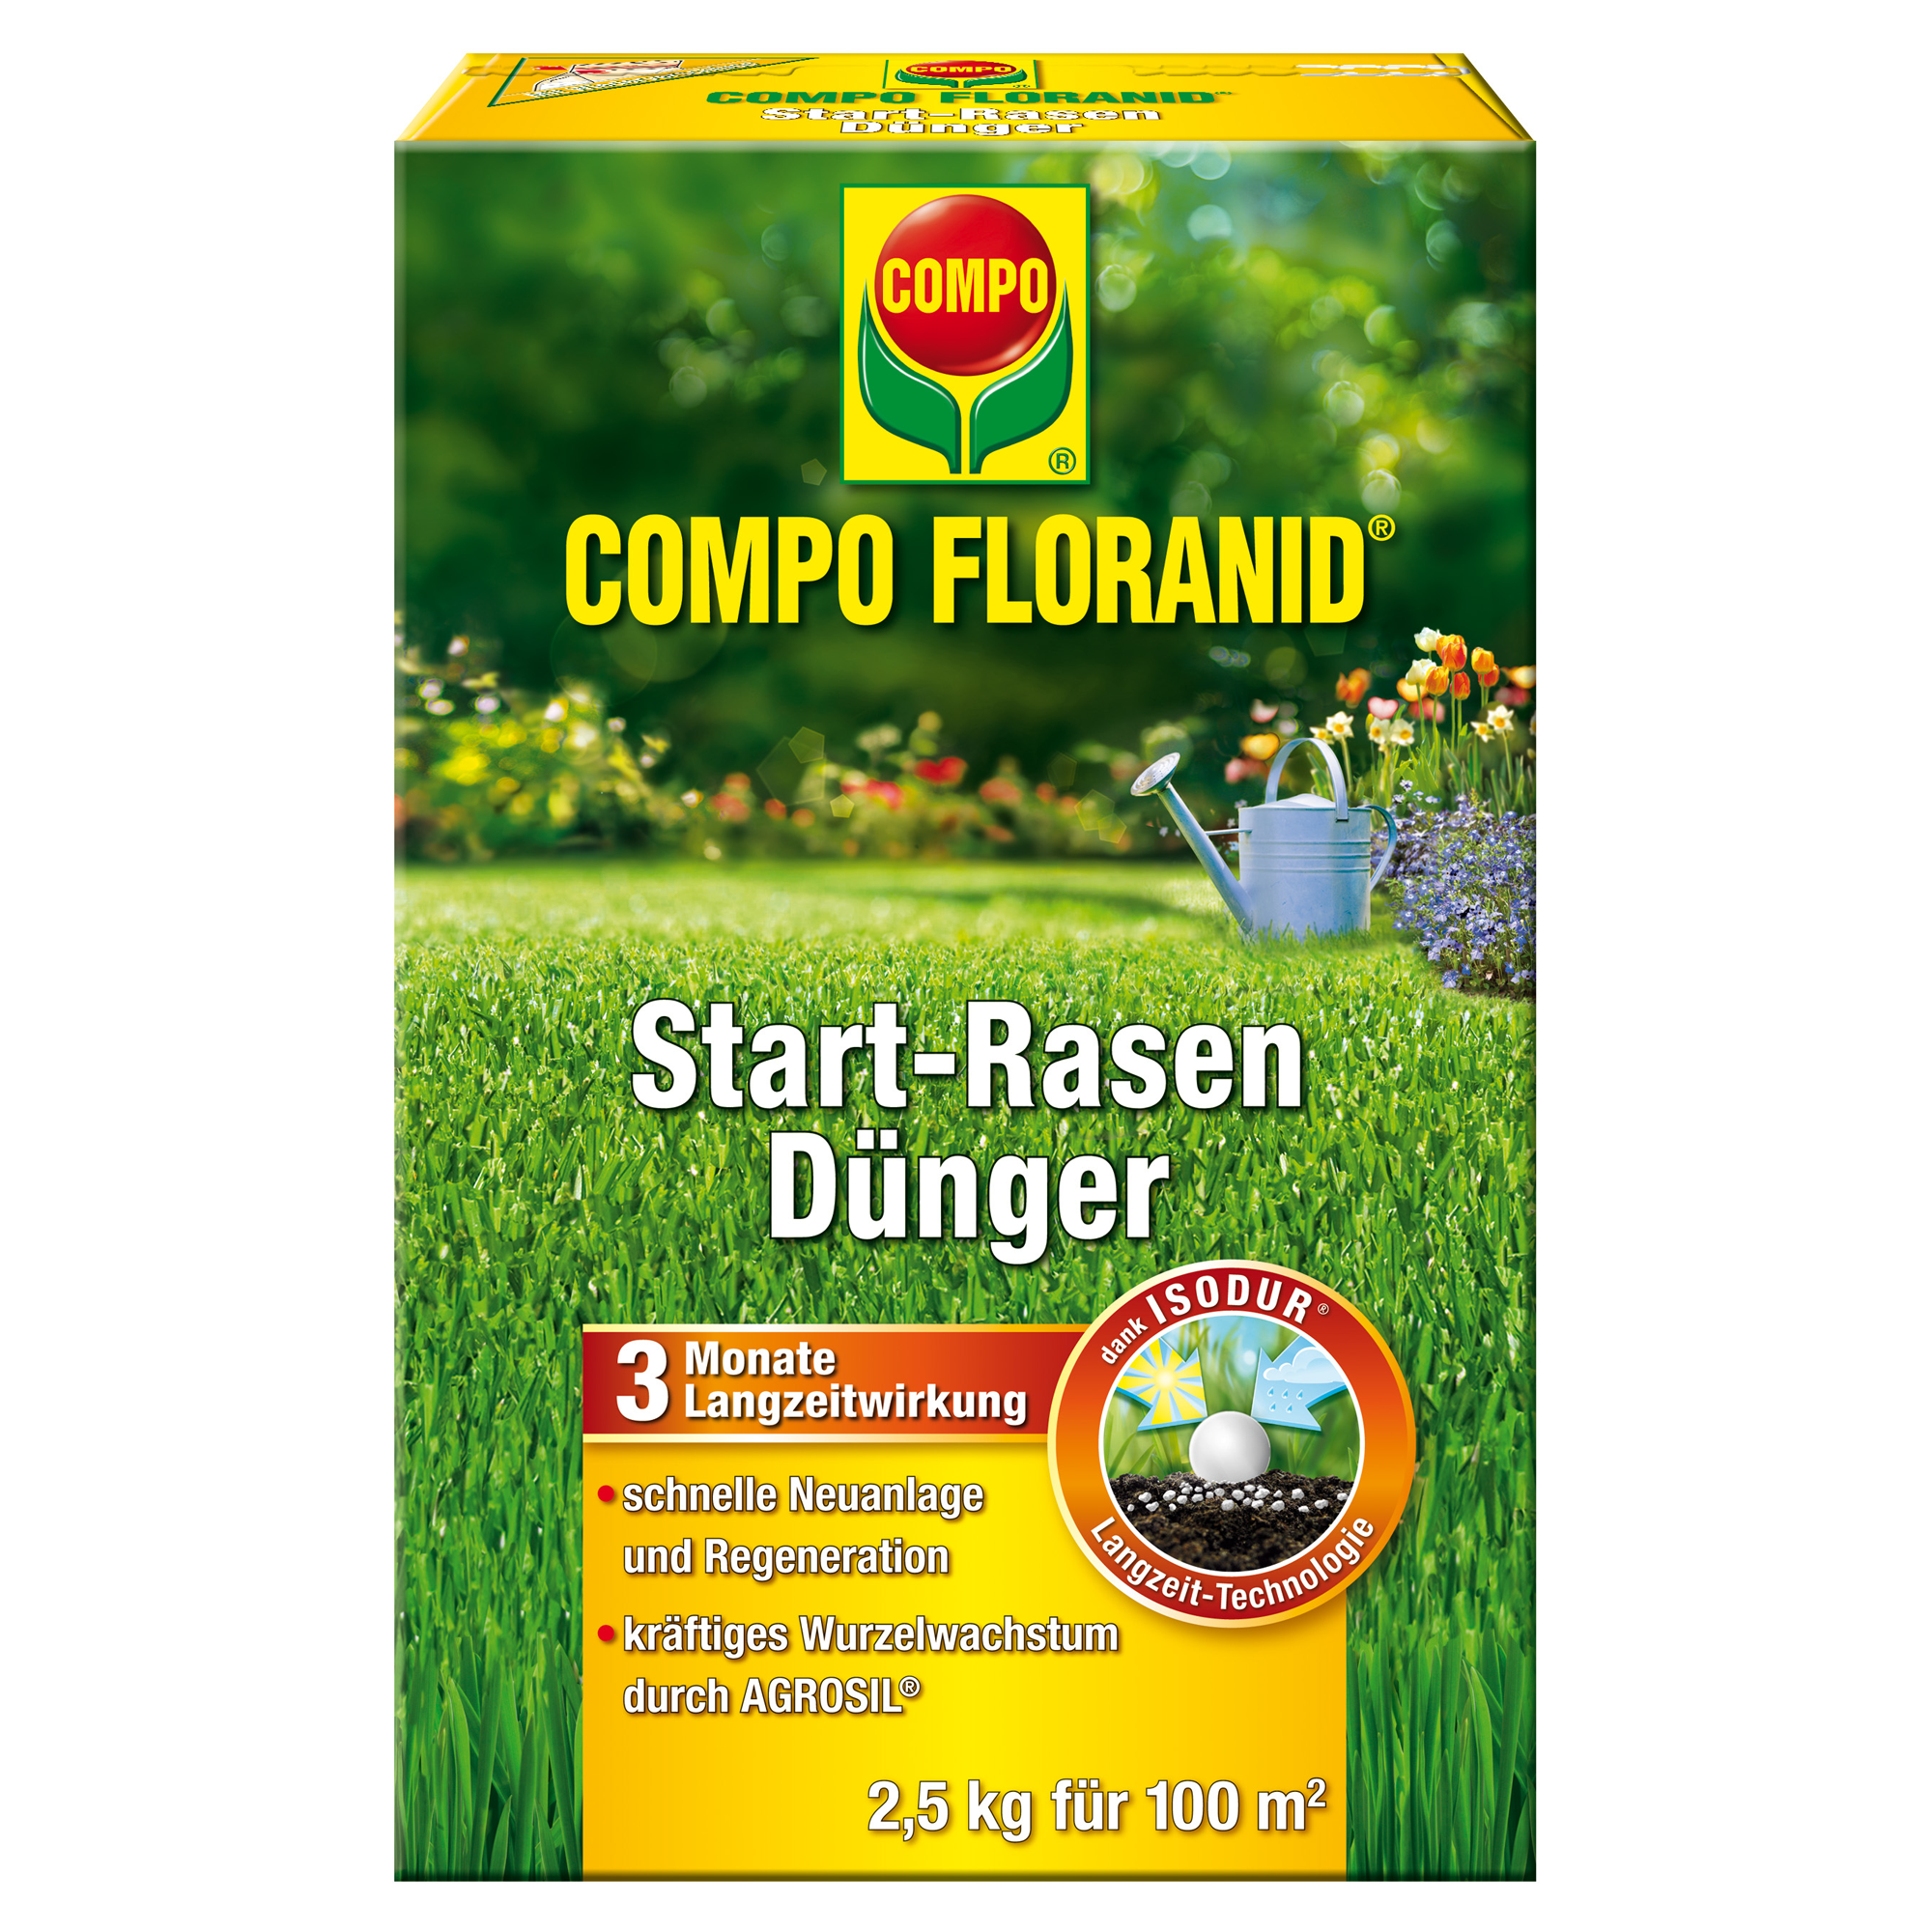 Start-Rasendünger "Floranid" 2,5 kg + product picture